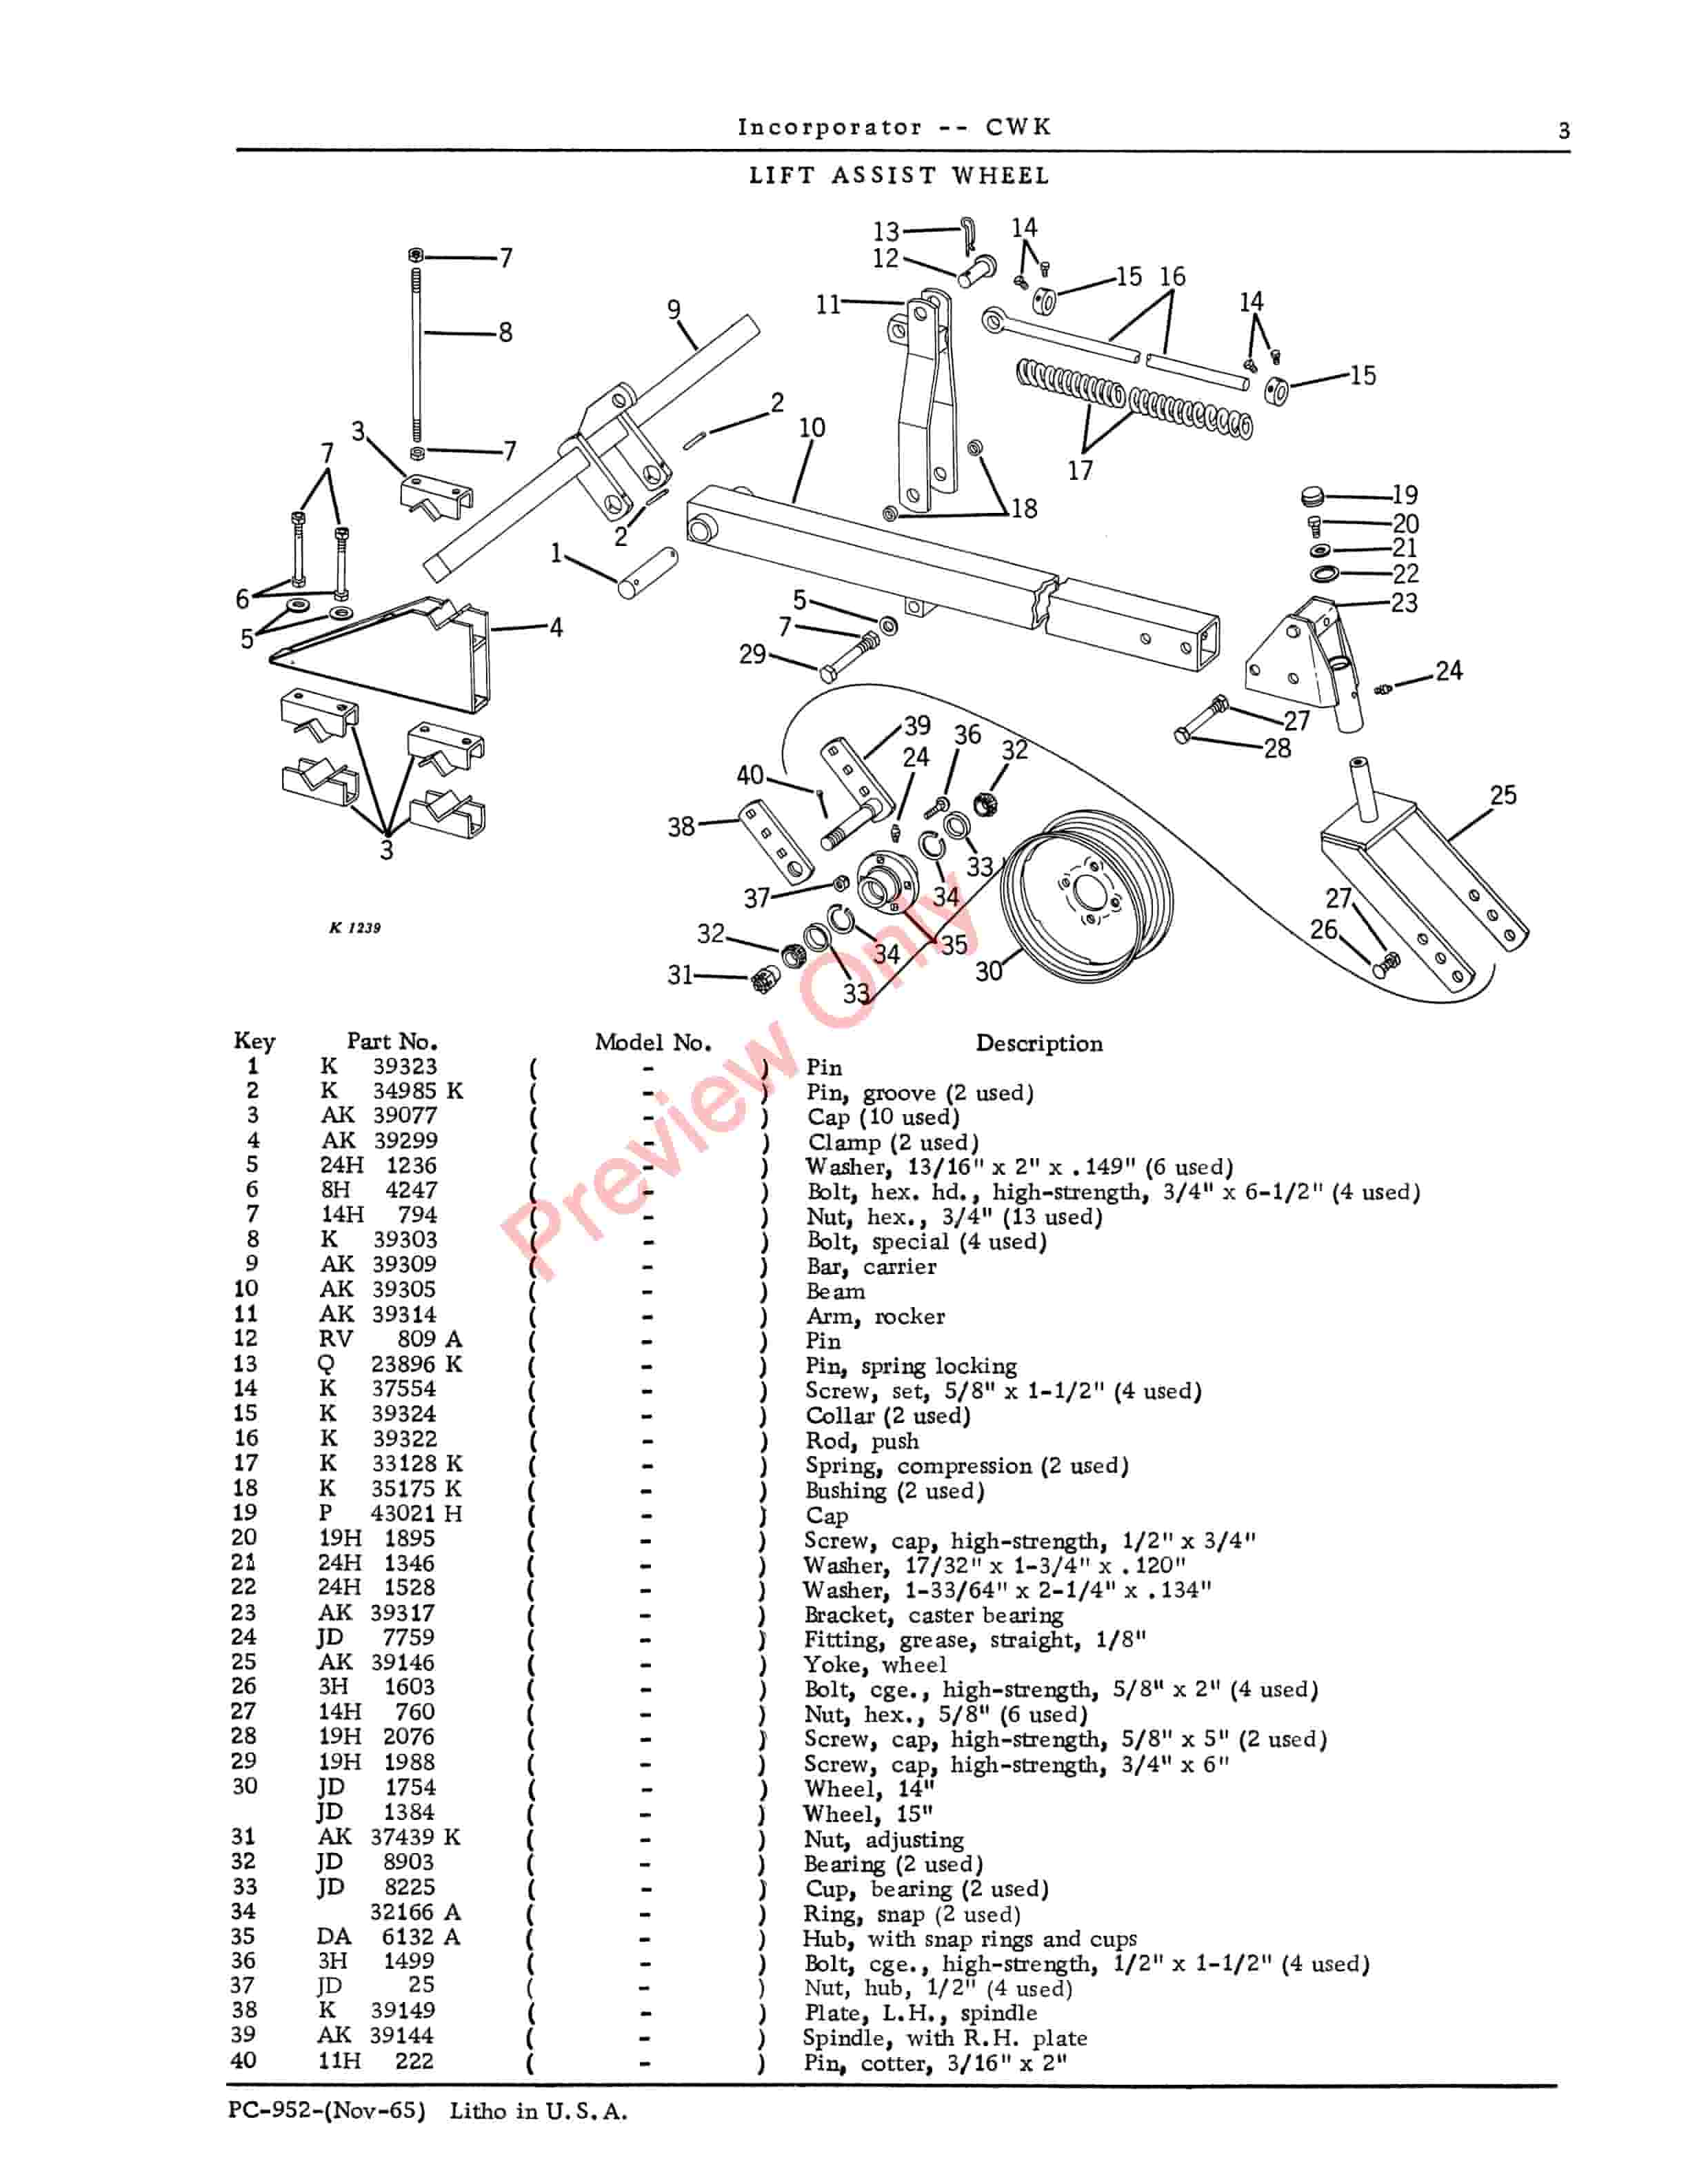 John Deere CWK Herbicide Incorporators Parts Catalog PC952 01NOV65-5